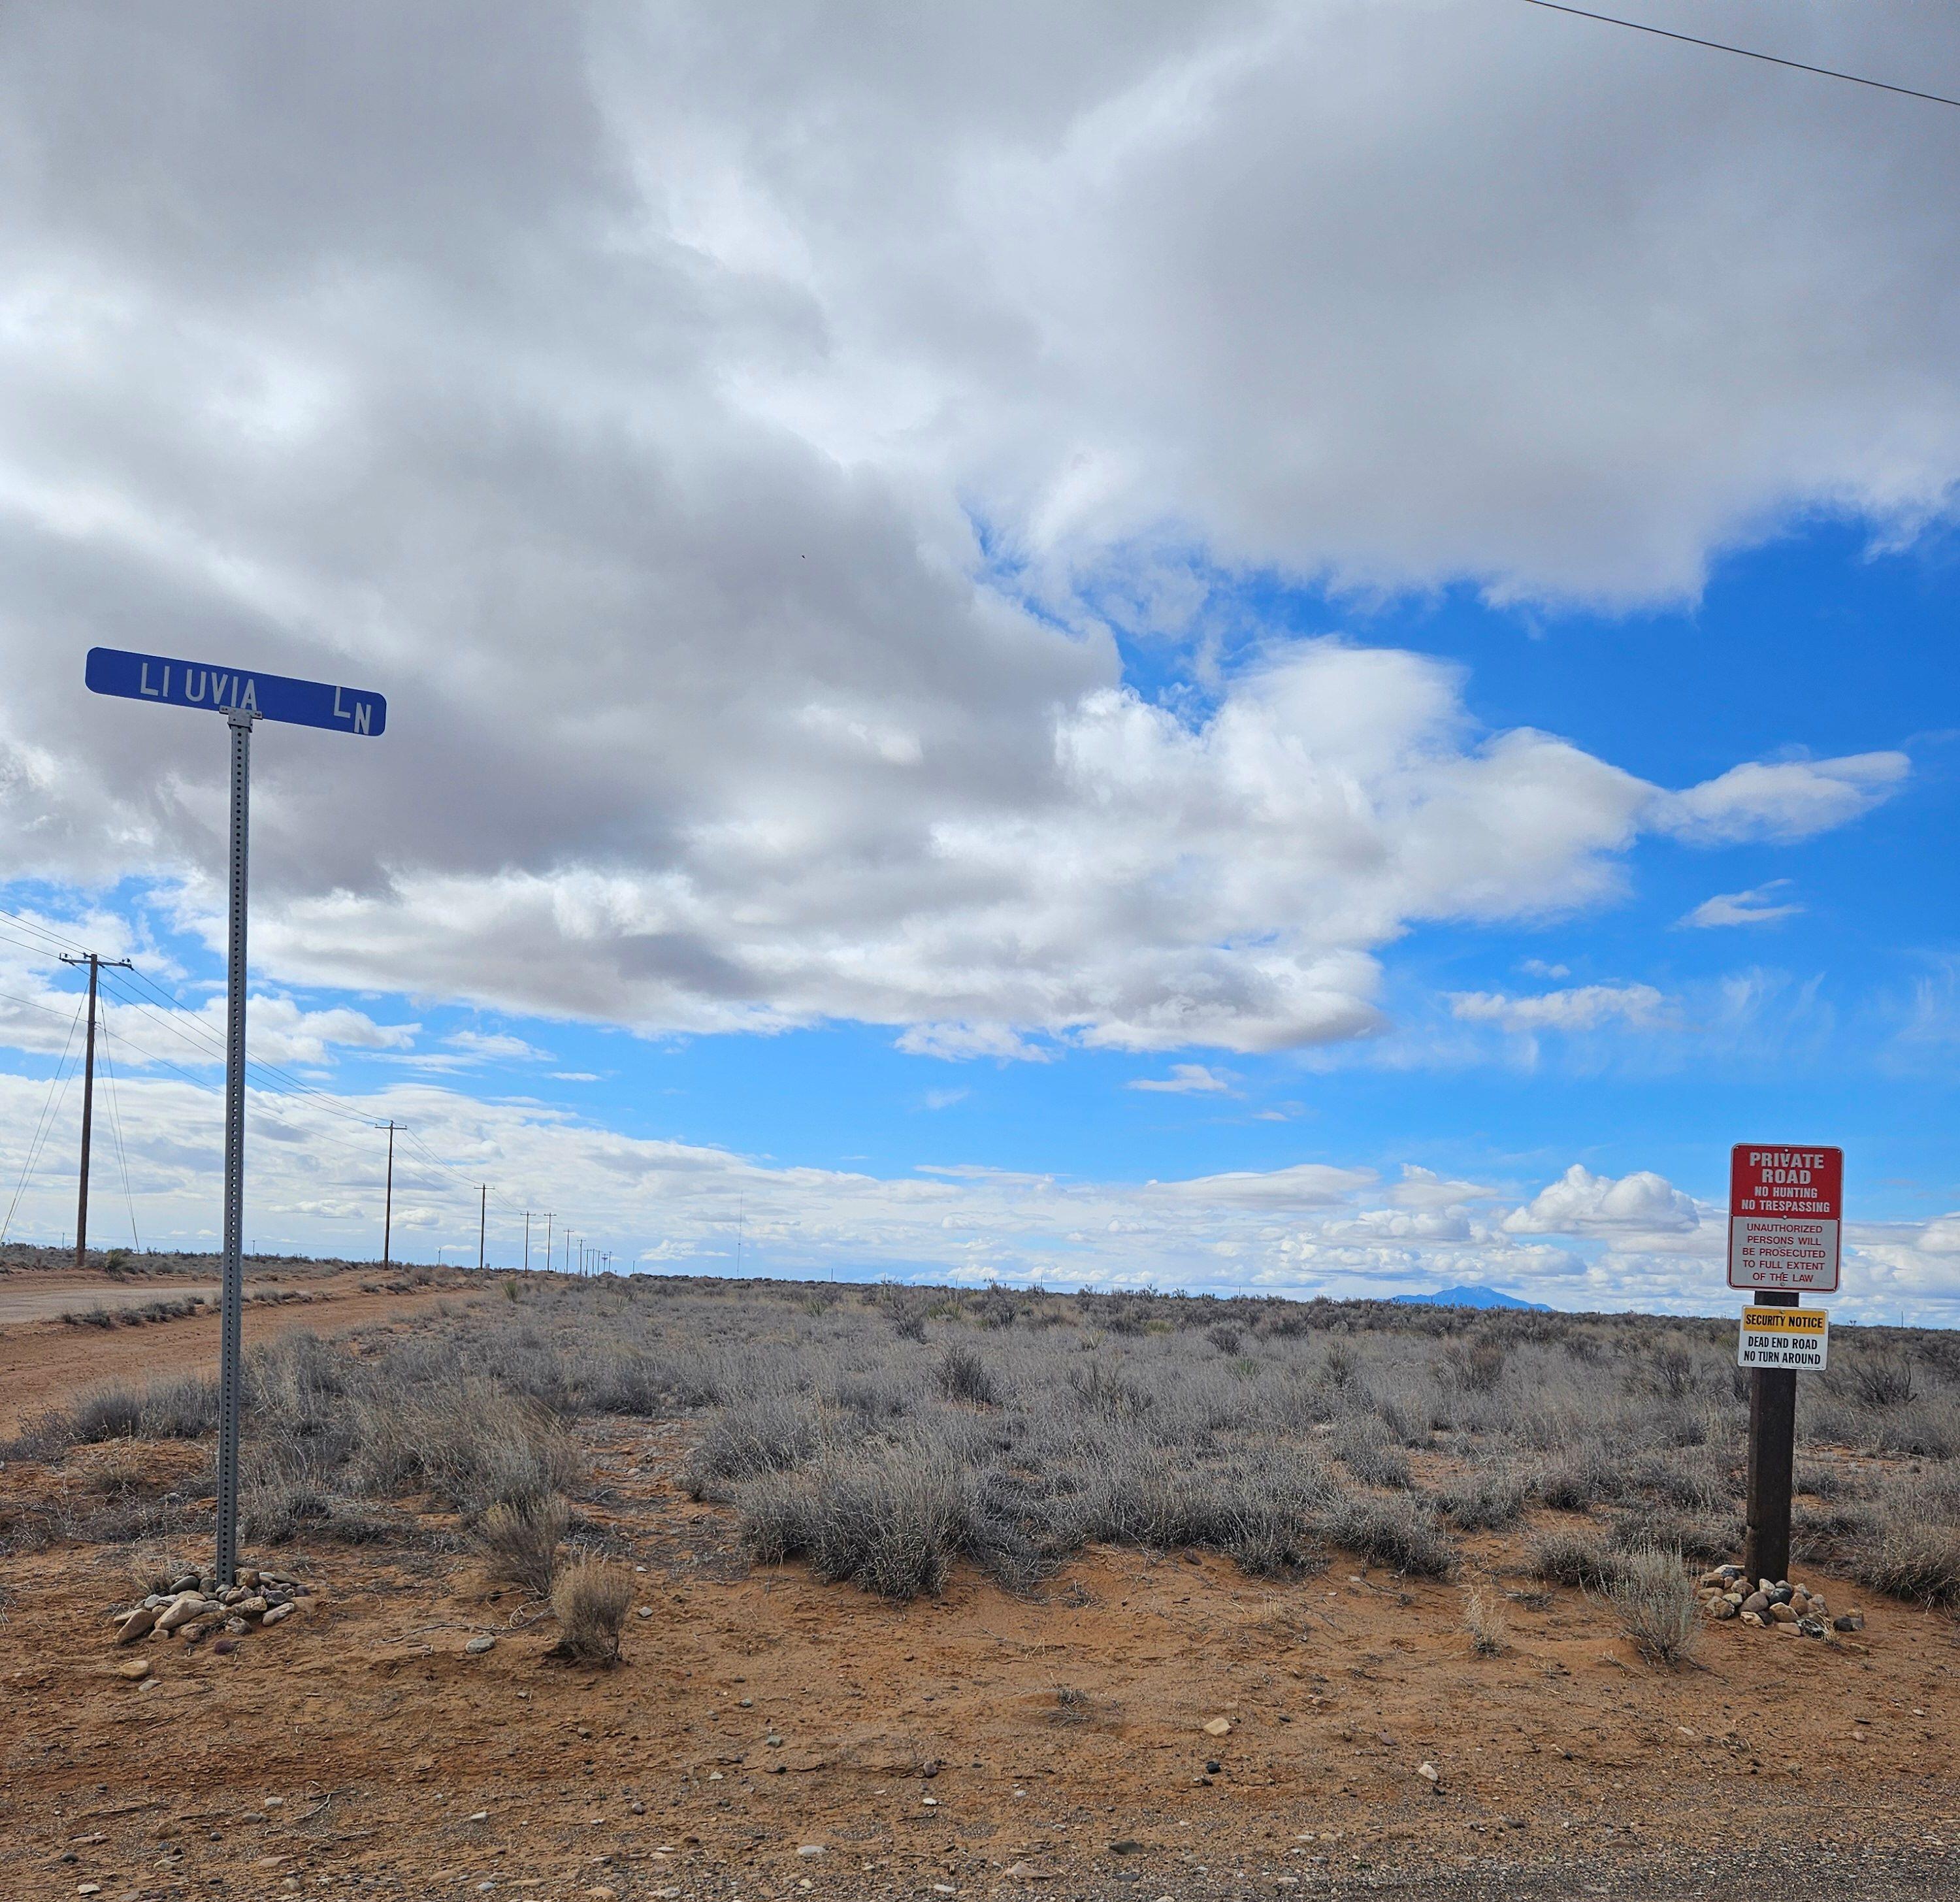 Tbd Lluvia Lane, Los Lunas, New Mexico 87031, ,Land,For Sale,Tbd Lluvia Lane,1059473